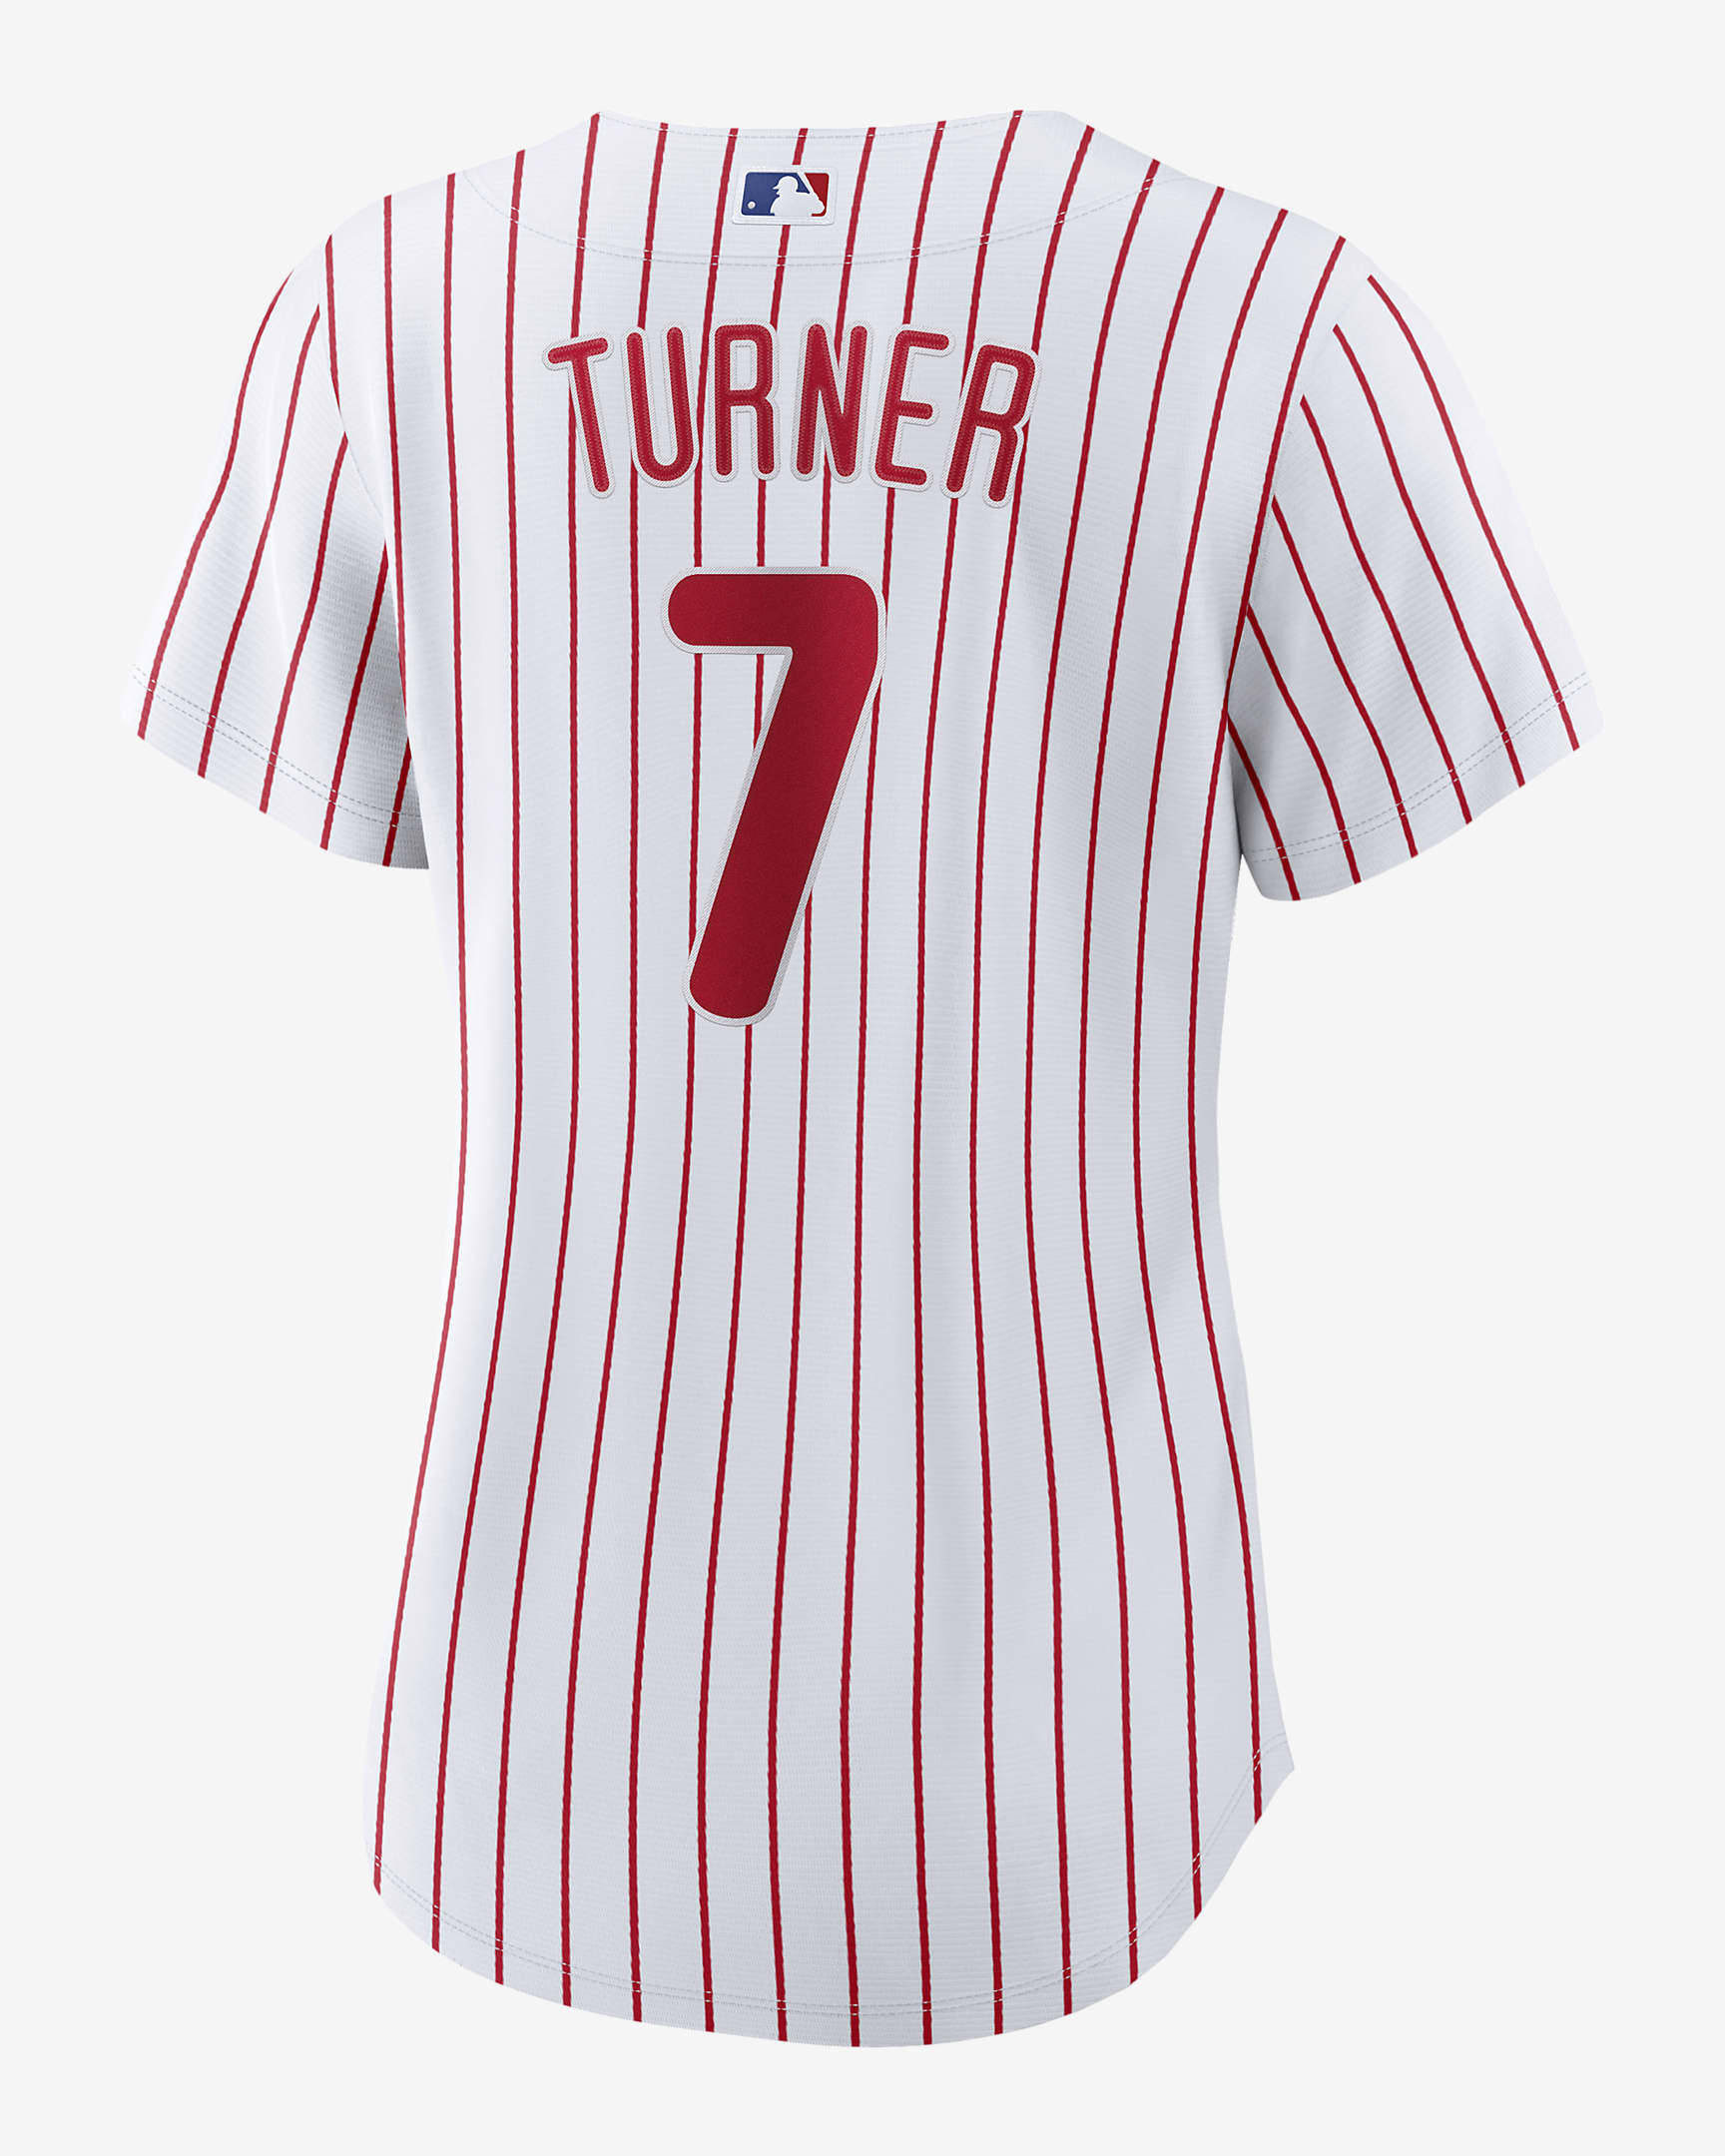 MLB Philadelphia Phillies (Trea Turner) Women's Replica Baseball Jersey